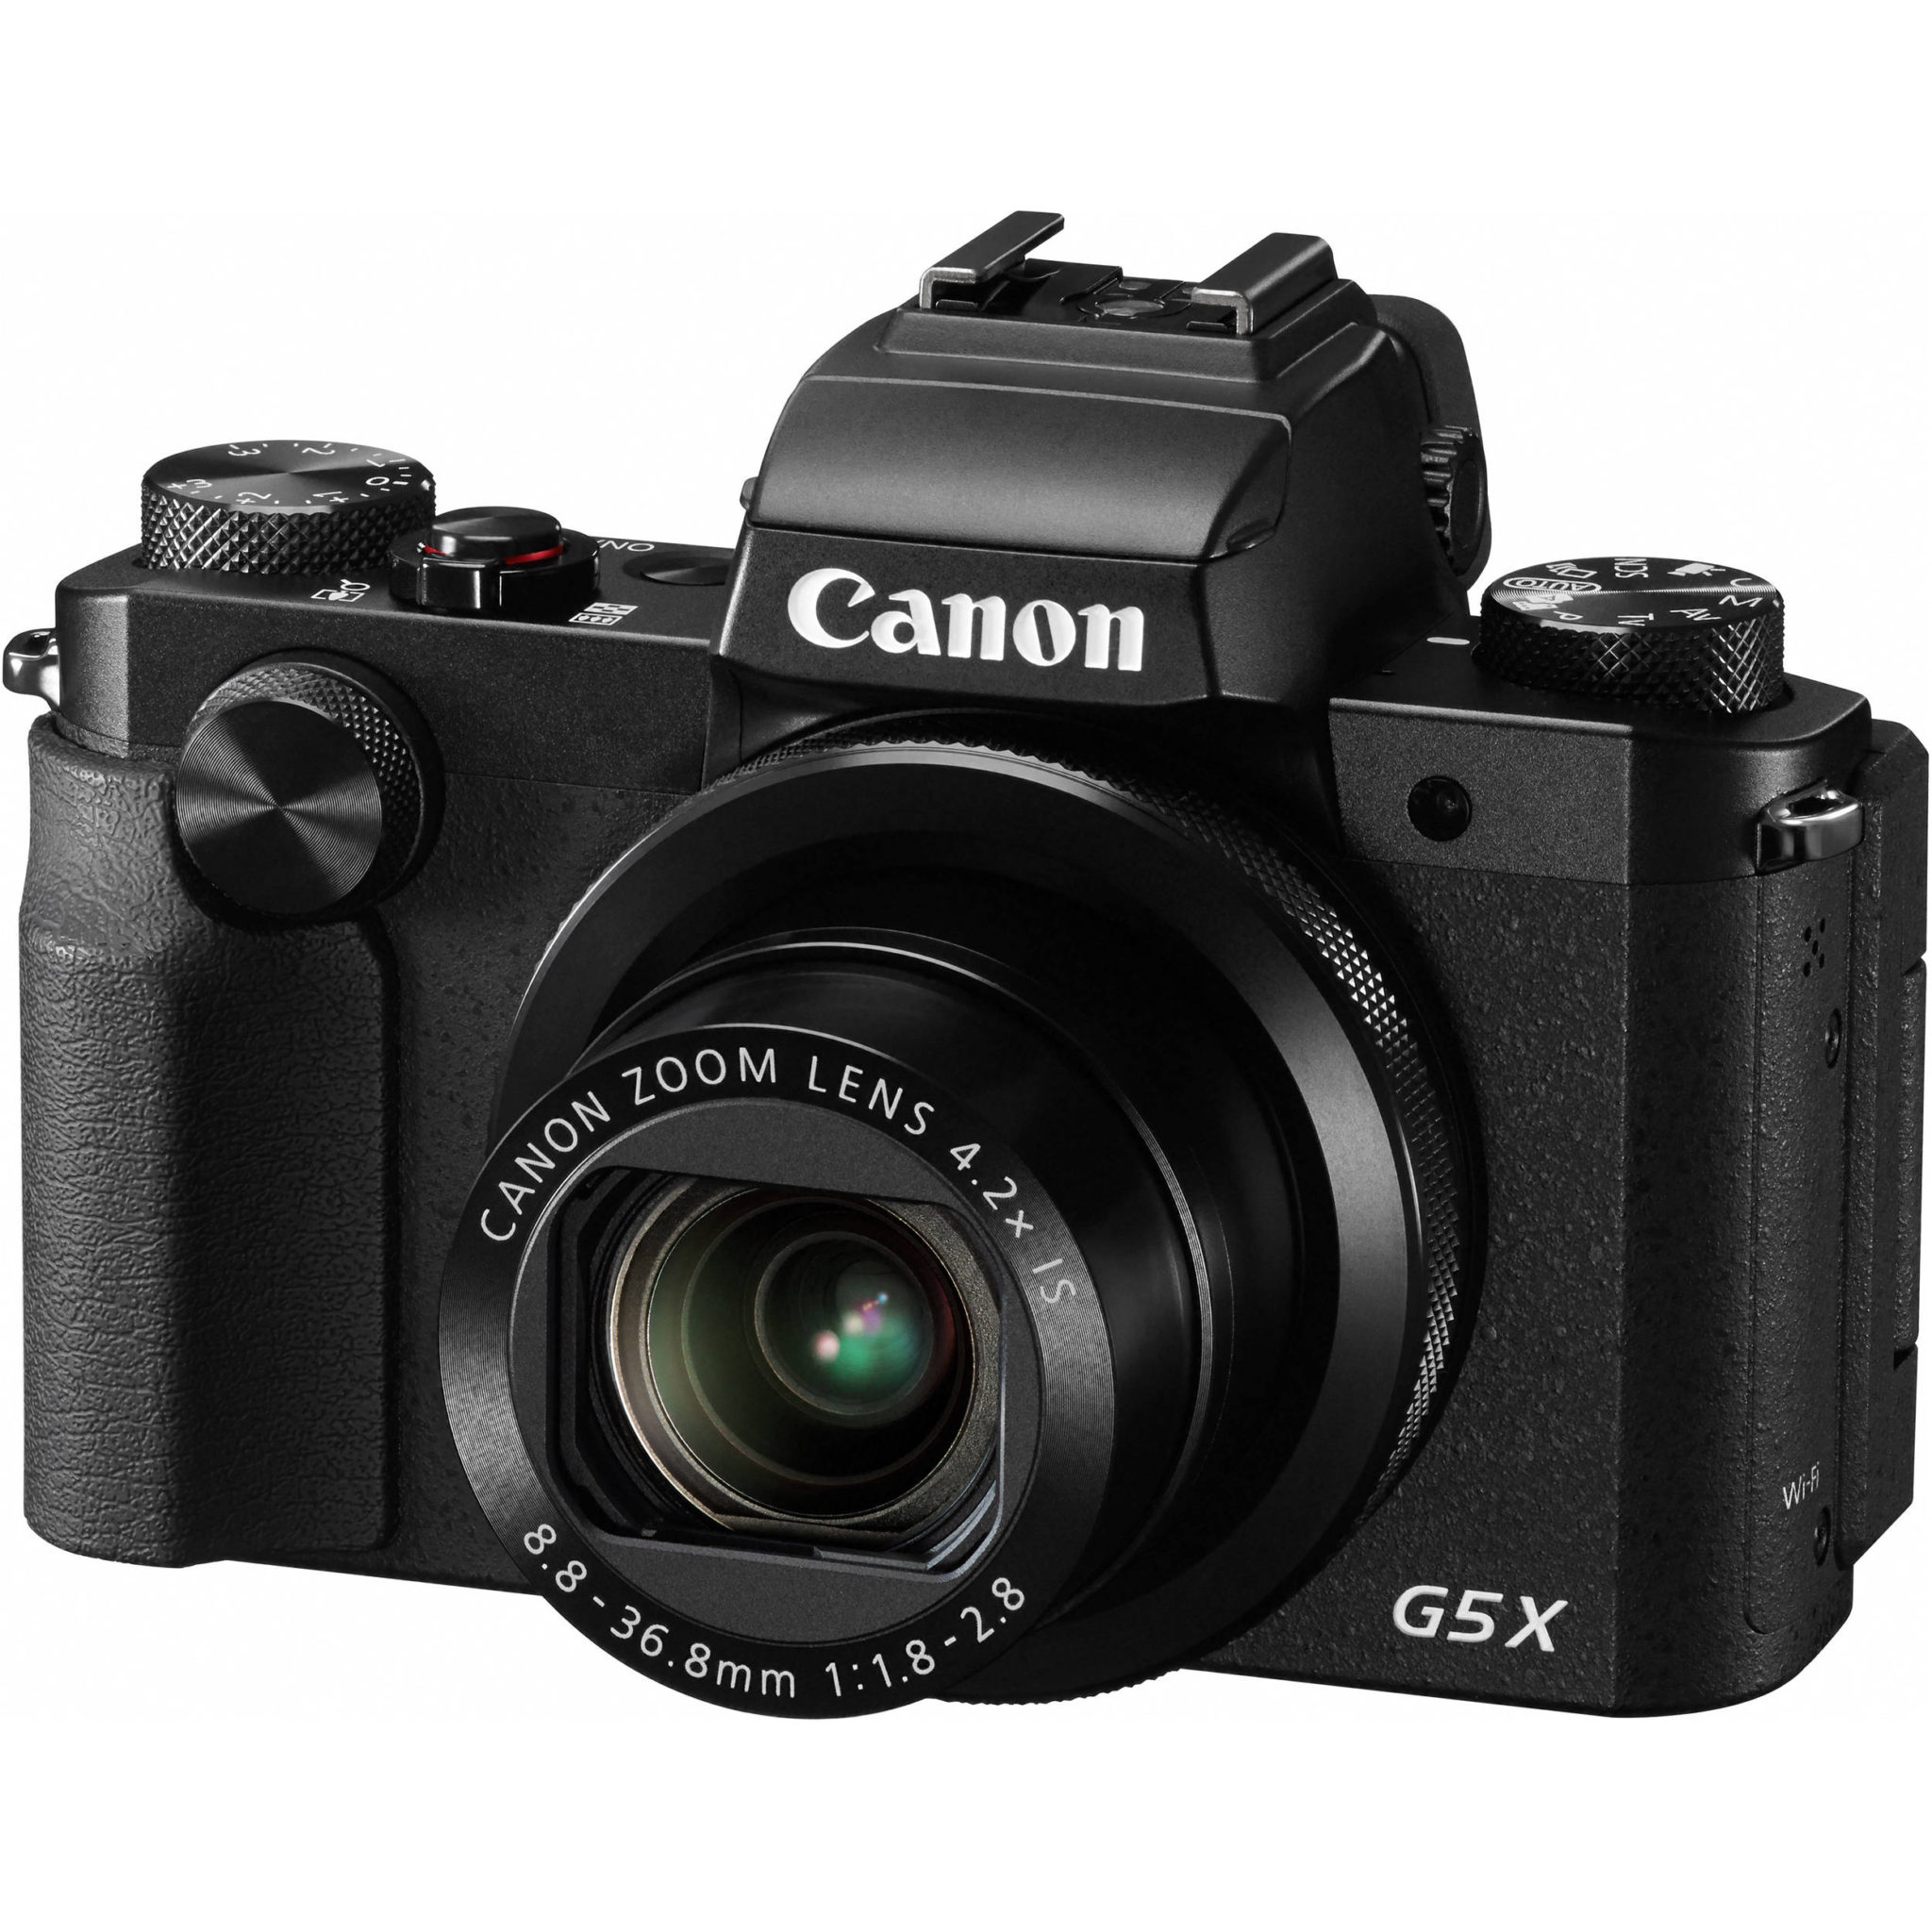 Canon G5X Digital Camera Price in Pakistan - Hashmi Photos